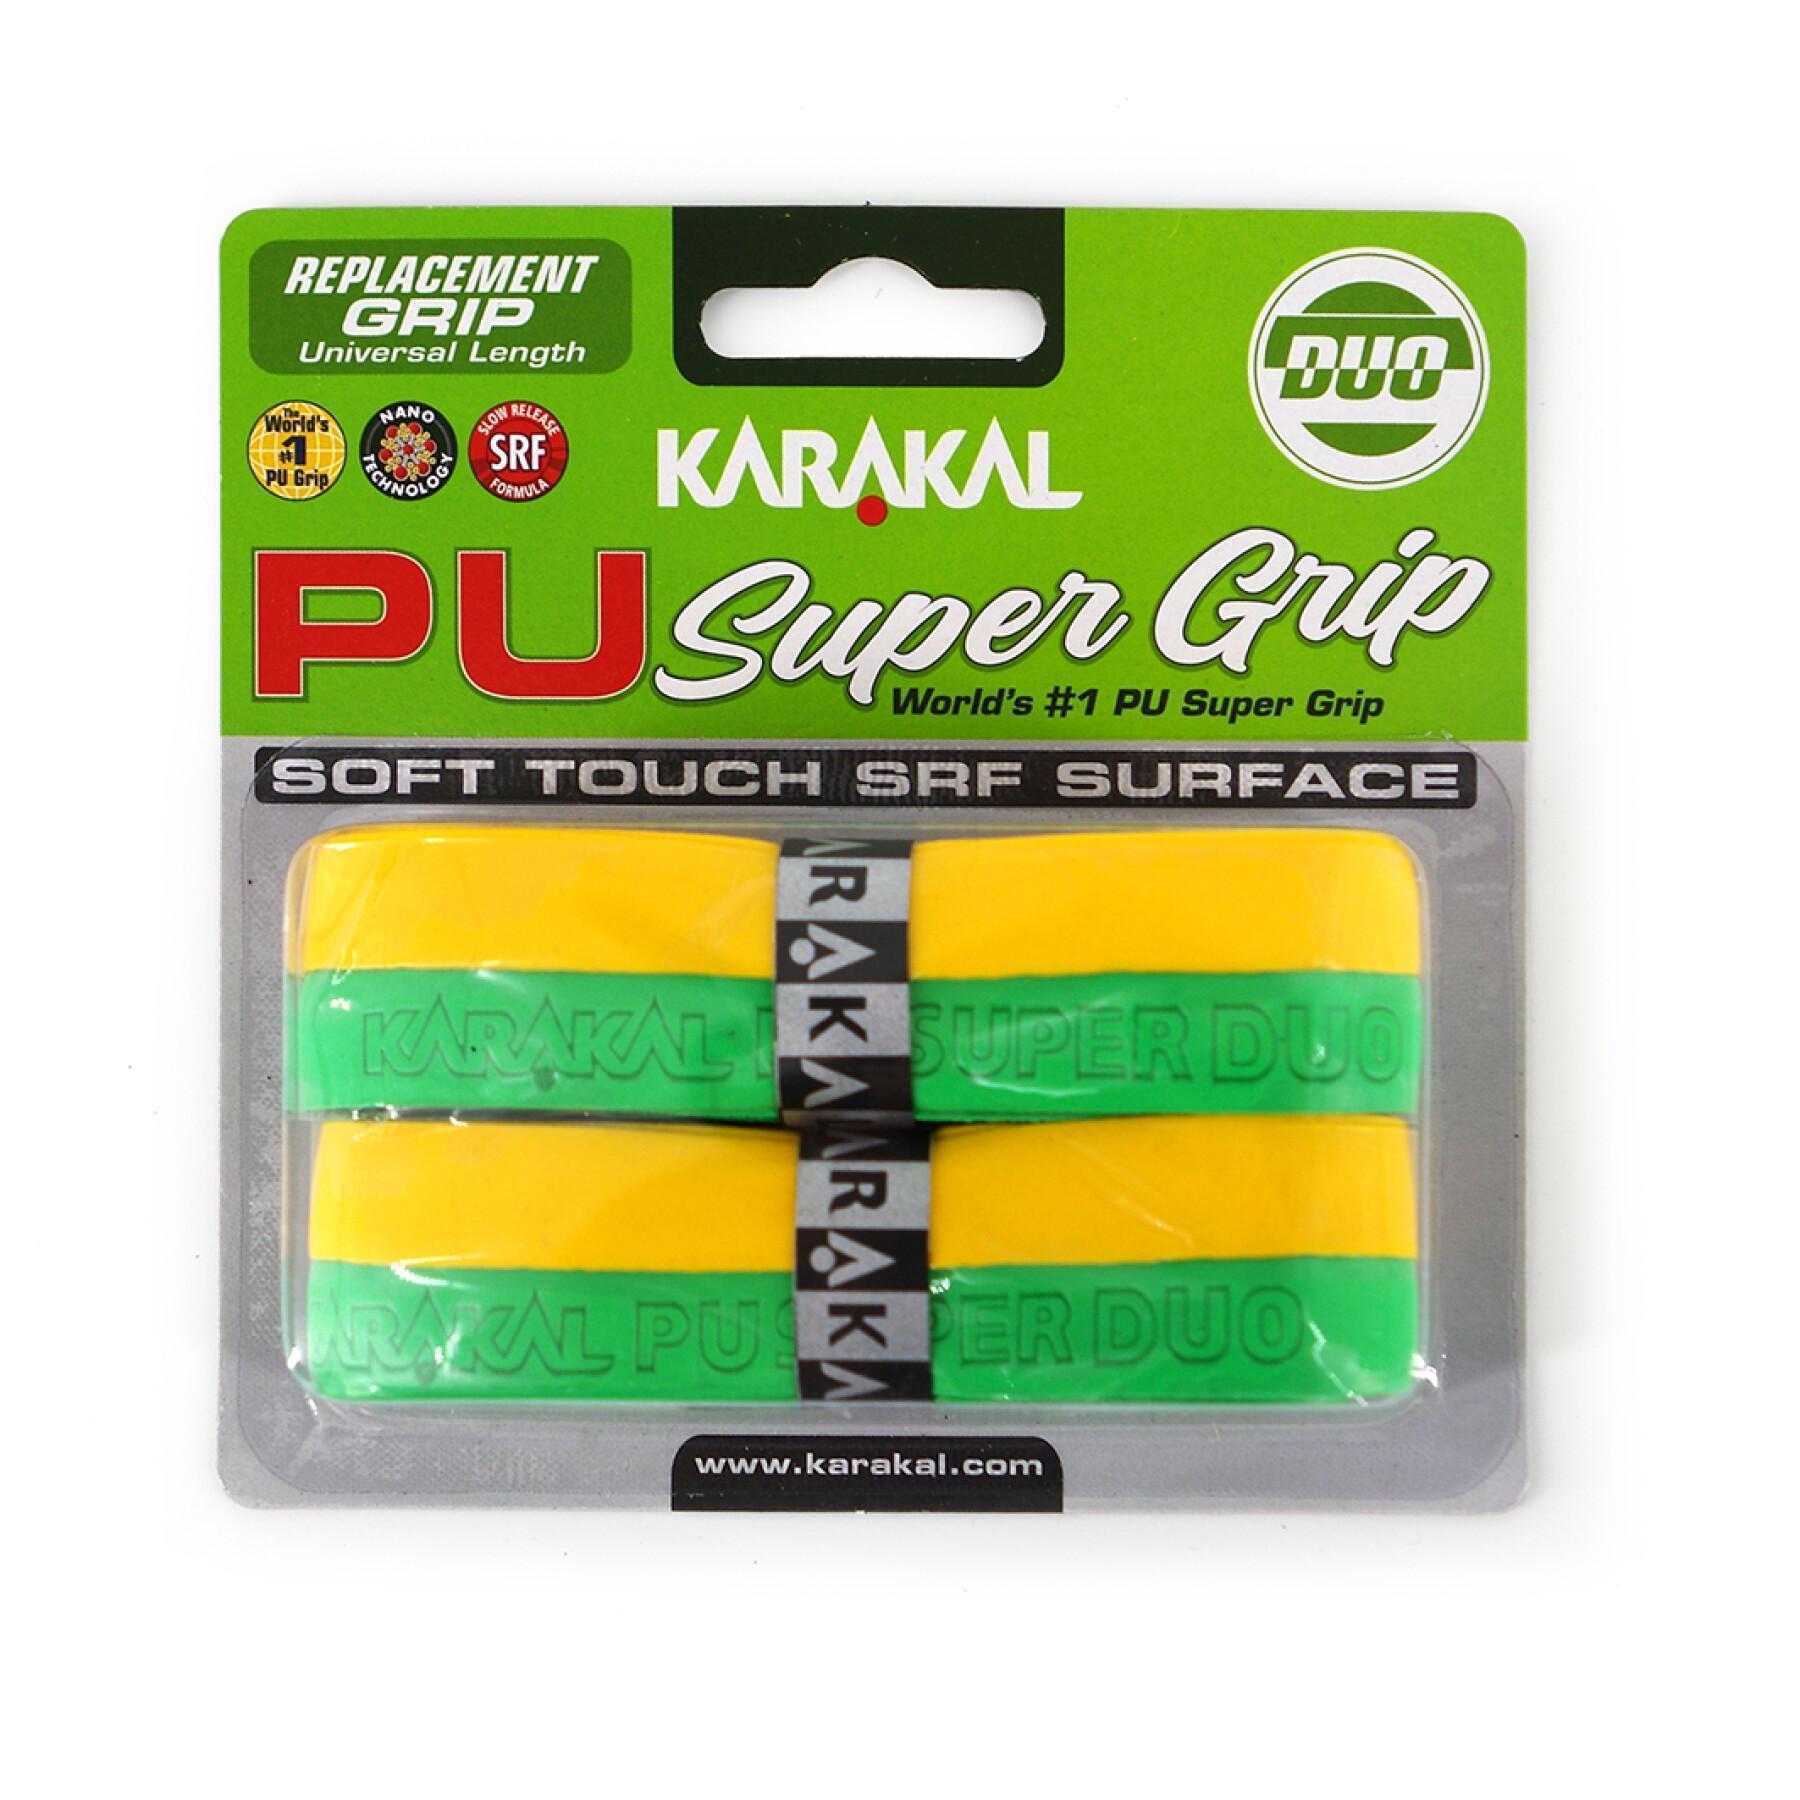 Lote de 2 sudaderas básicas grips couleurs duo PU Karakal Super Grip